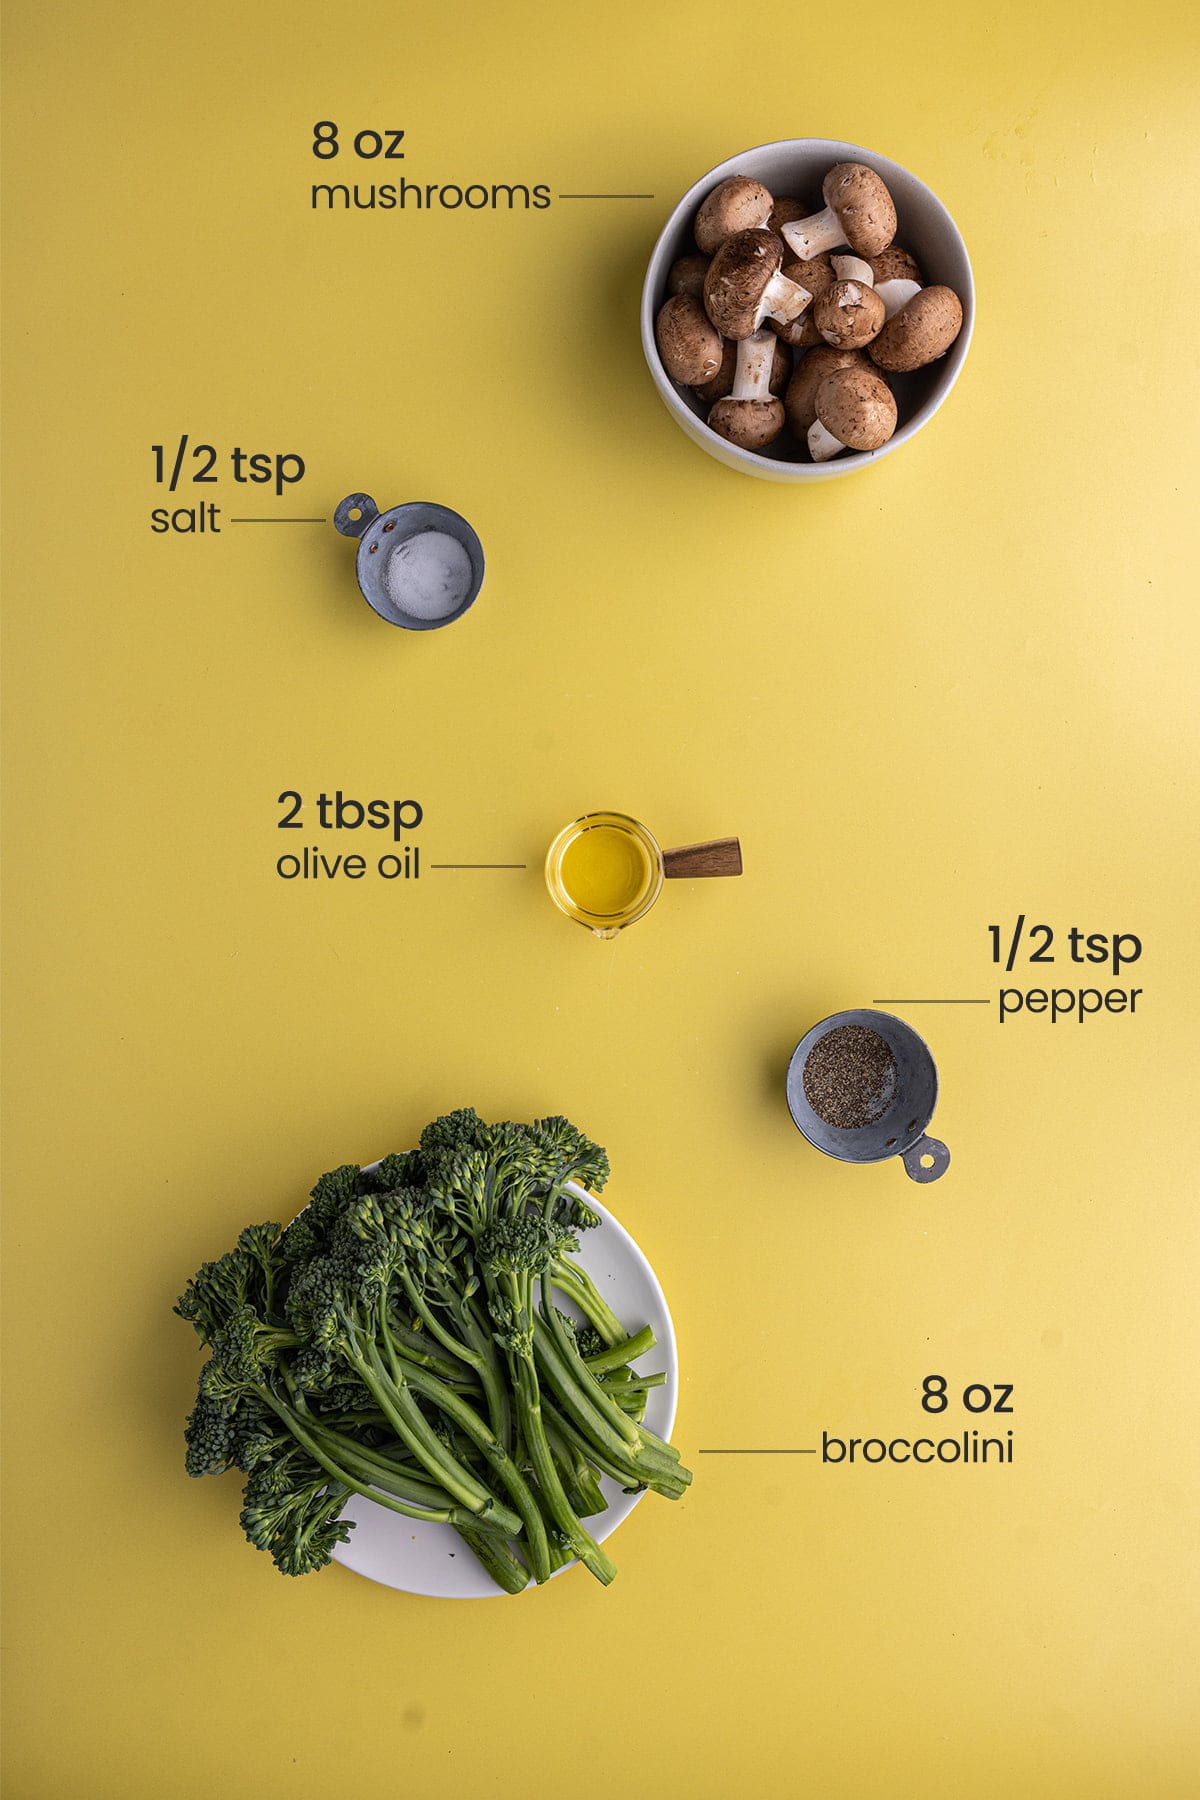 ingredients needed for sauteed broccolini and mushrooms - salt, mushrooms, olive oil, pepper, broccolini